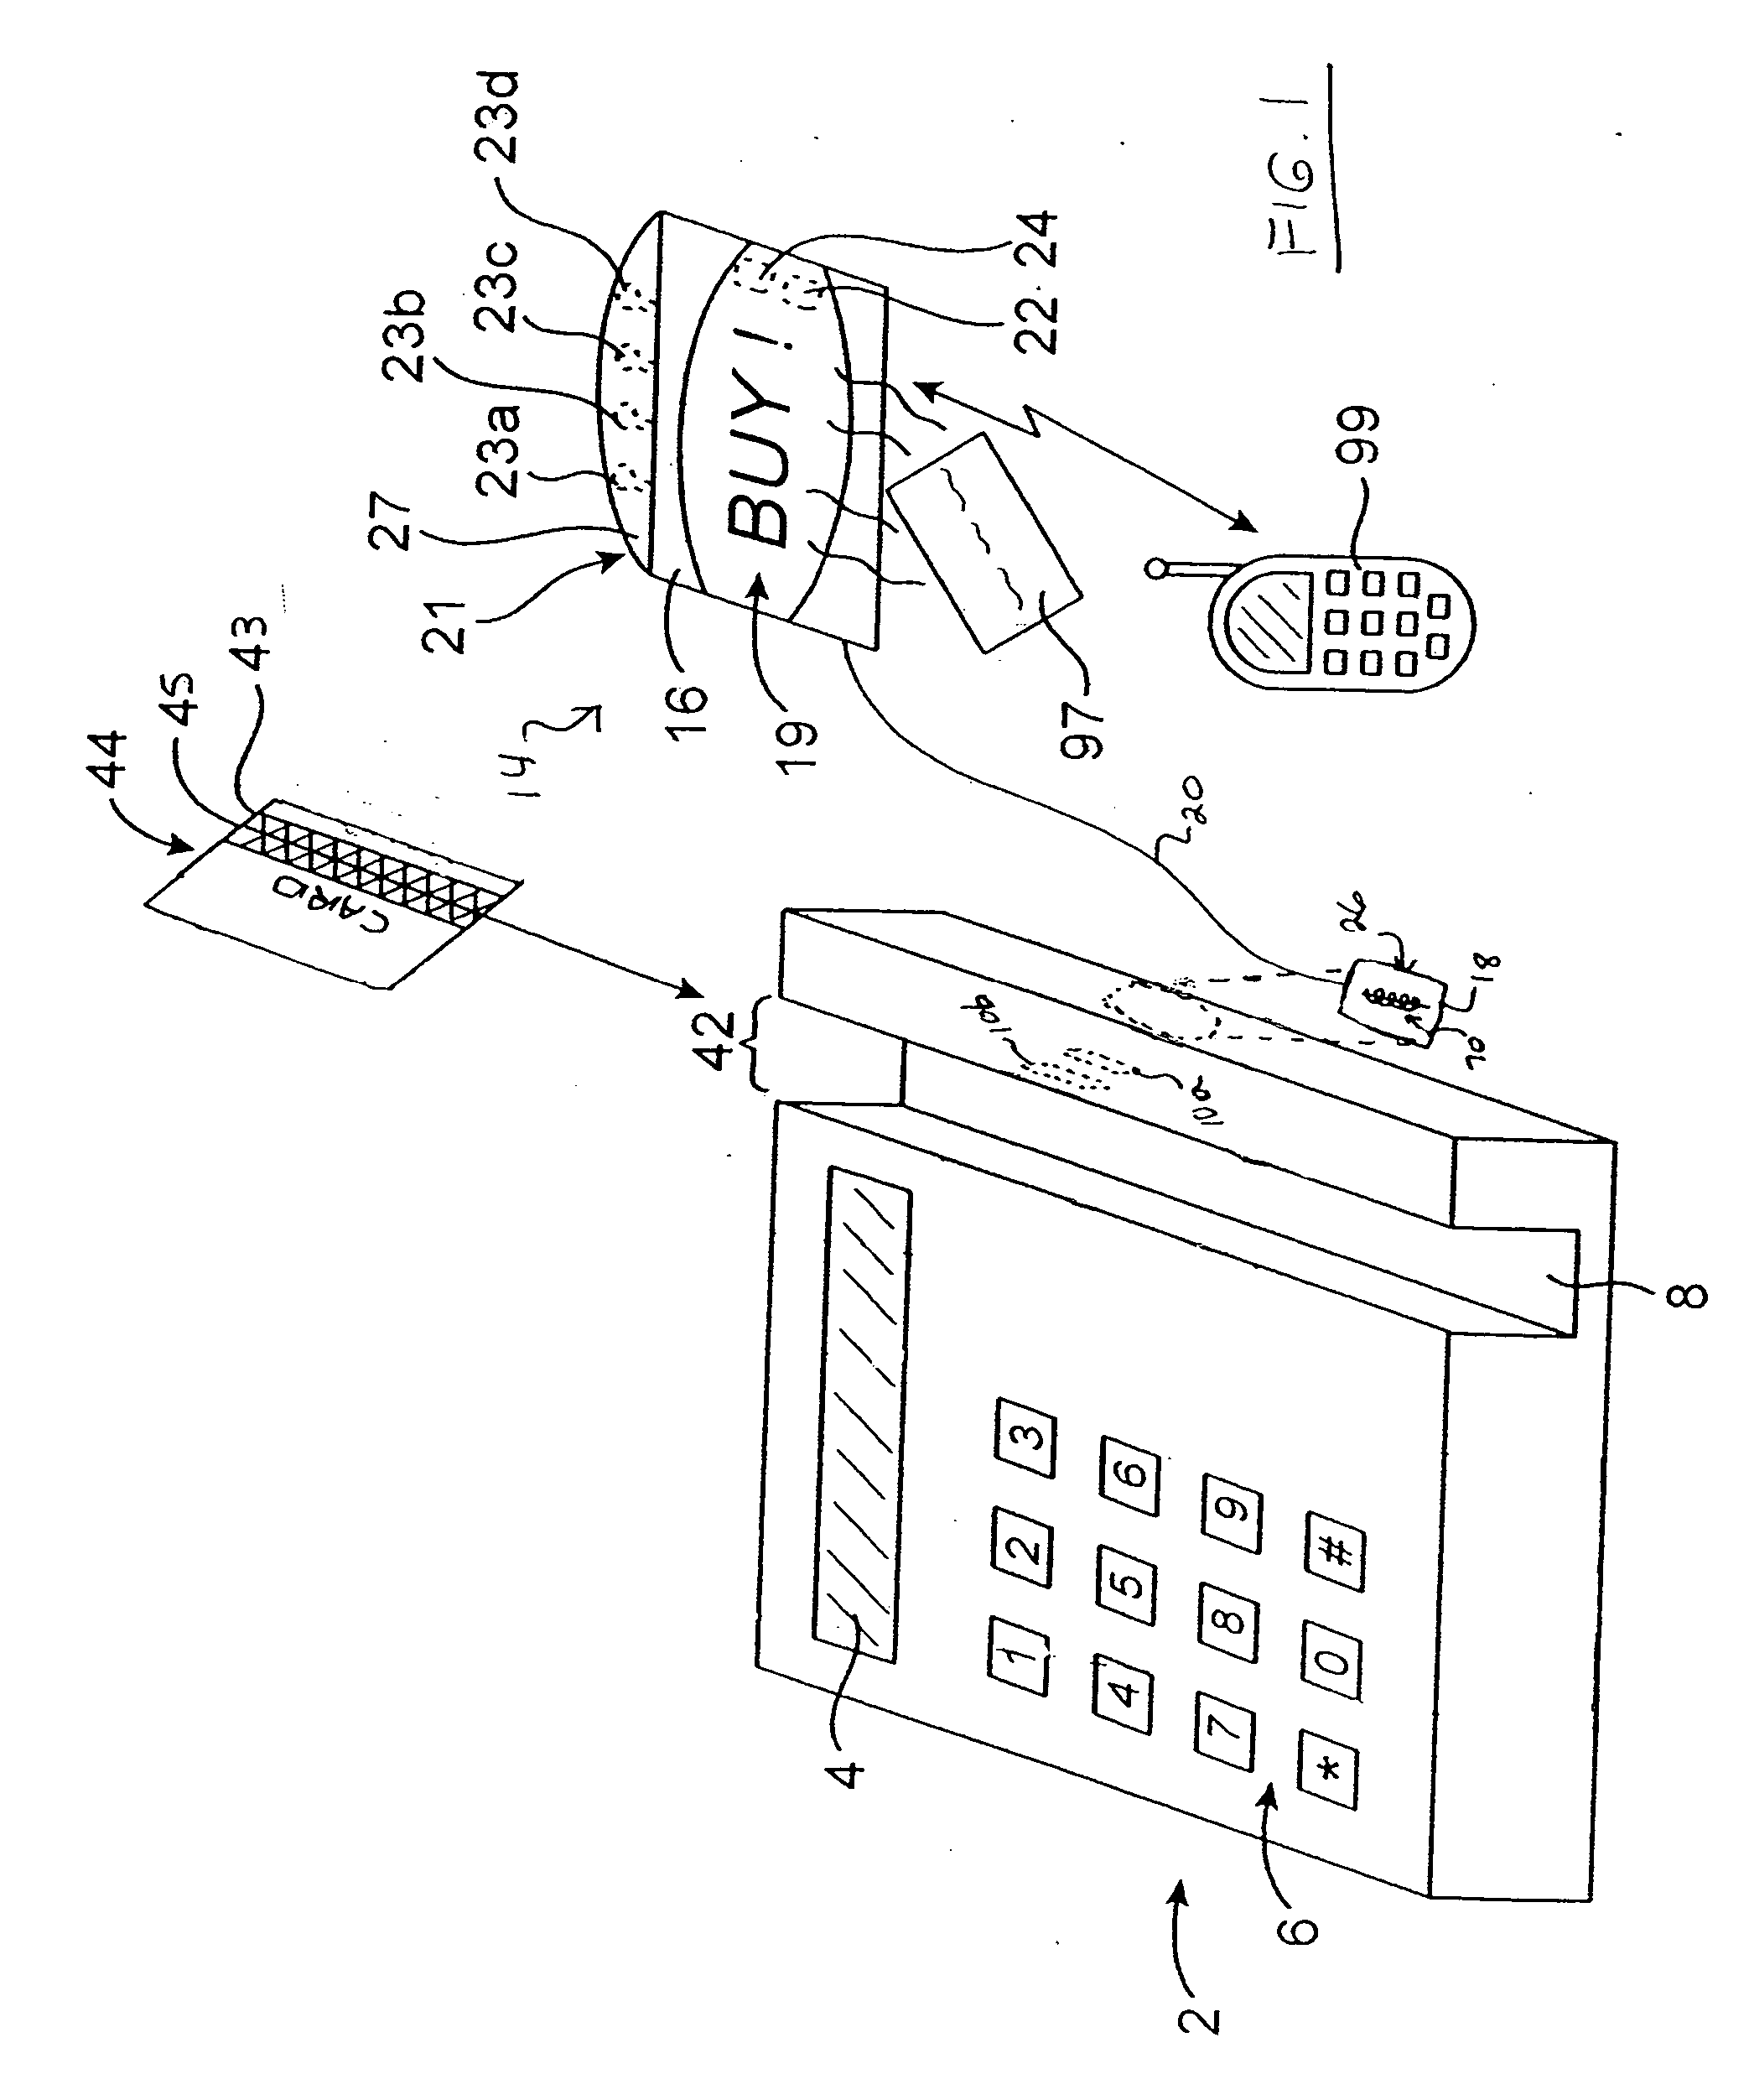 External adaptor for magnetic stripe card reader